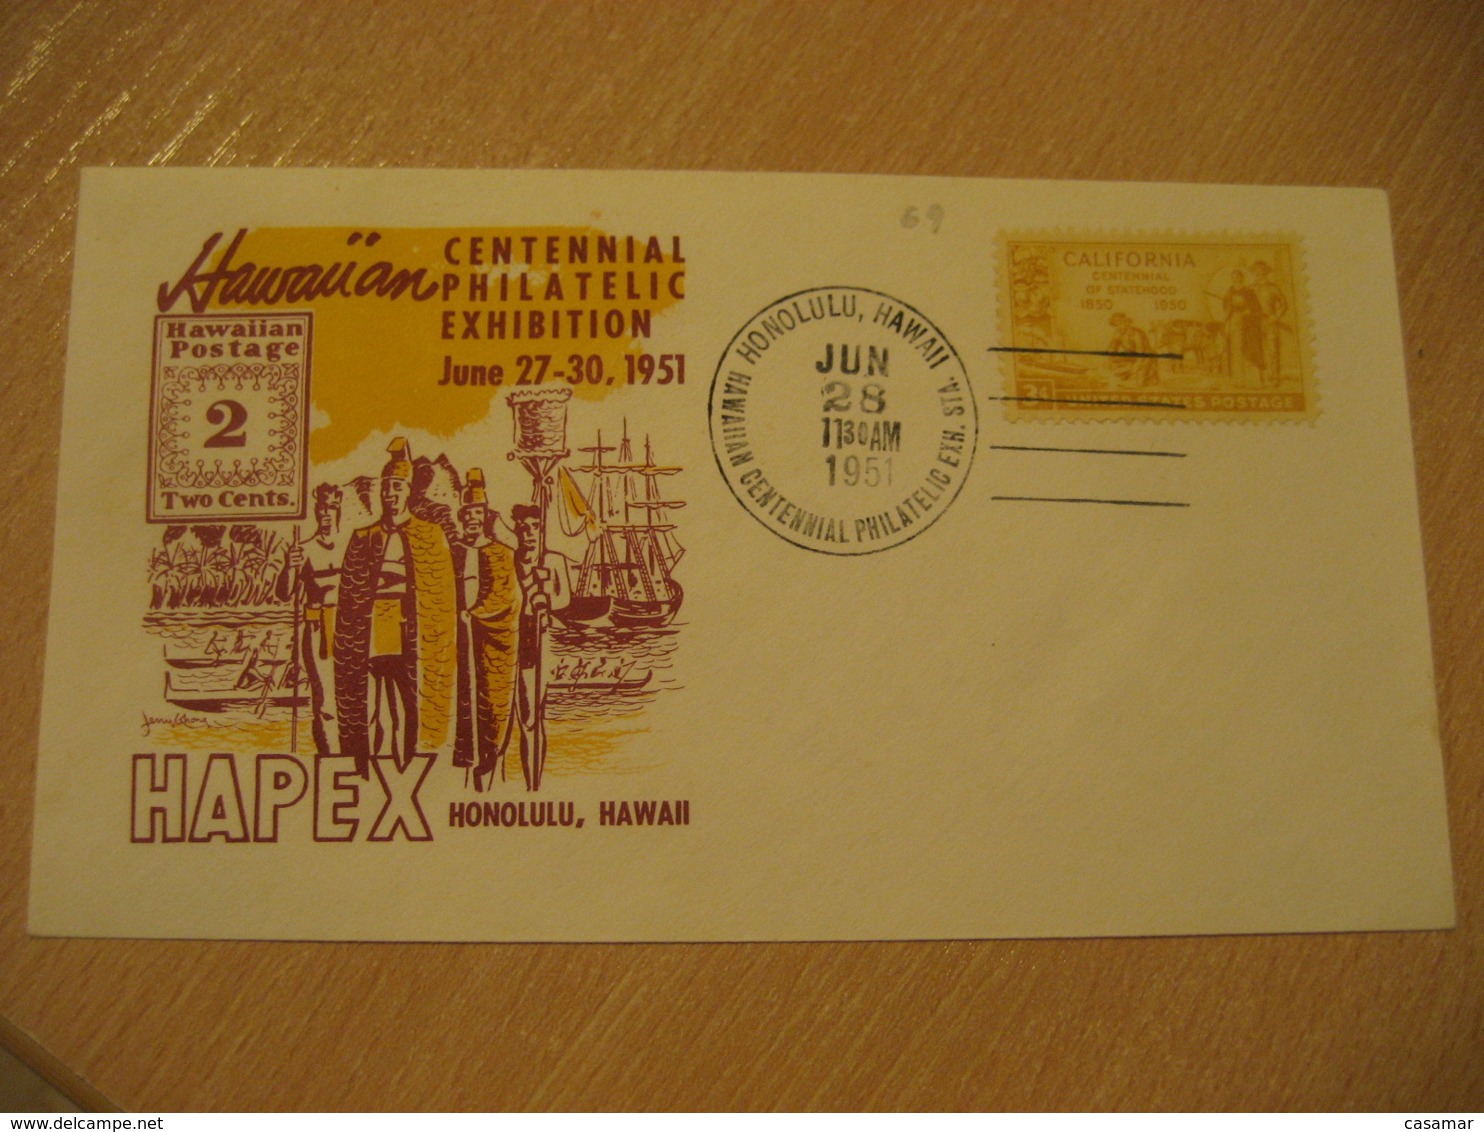 HONOLULU 1951 HAPEX Centennial Philatelic Exhibition HAWAII Cancel Cover USA - Hawaii